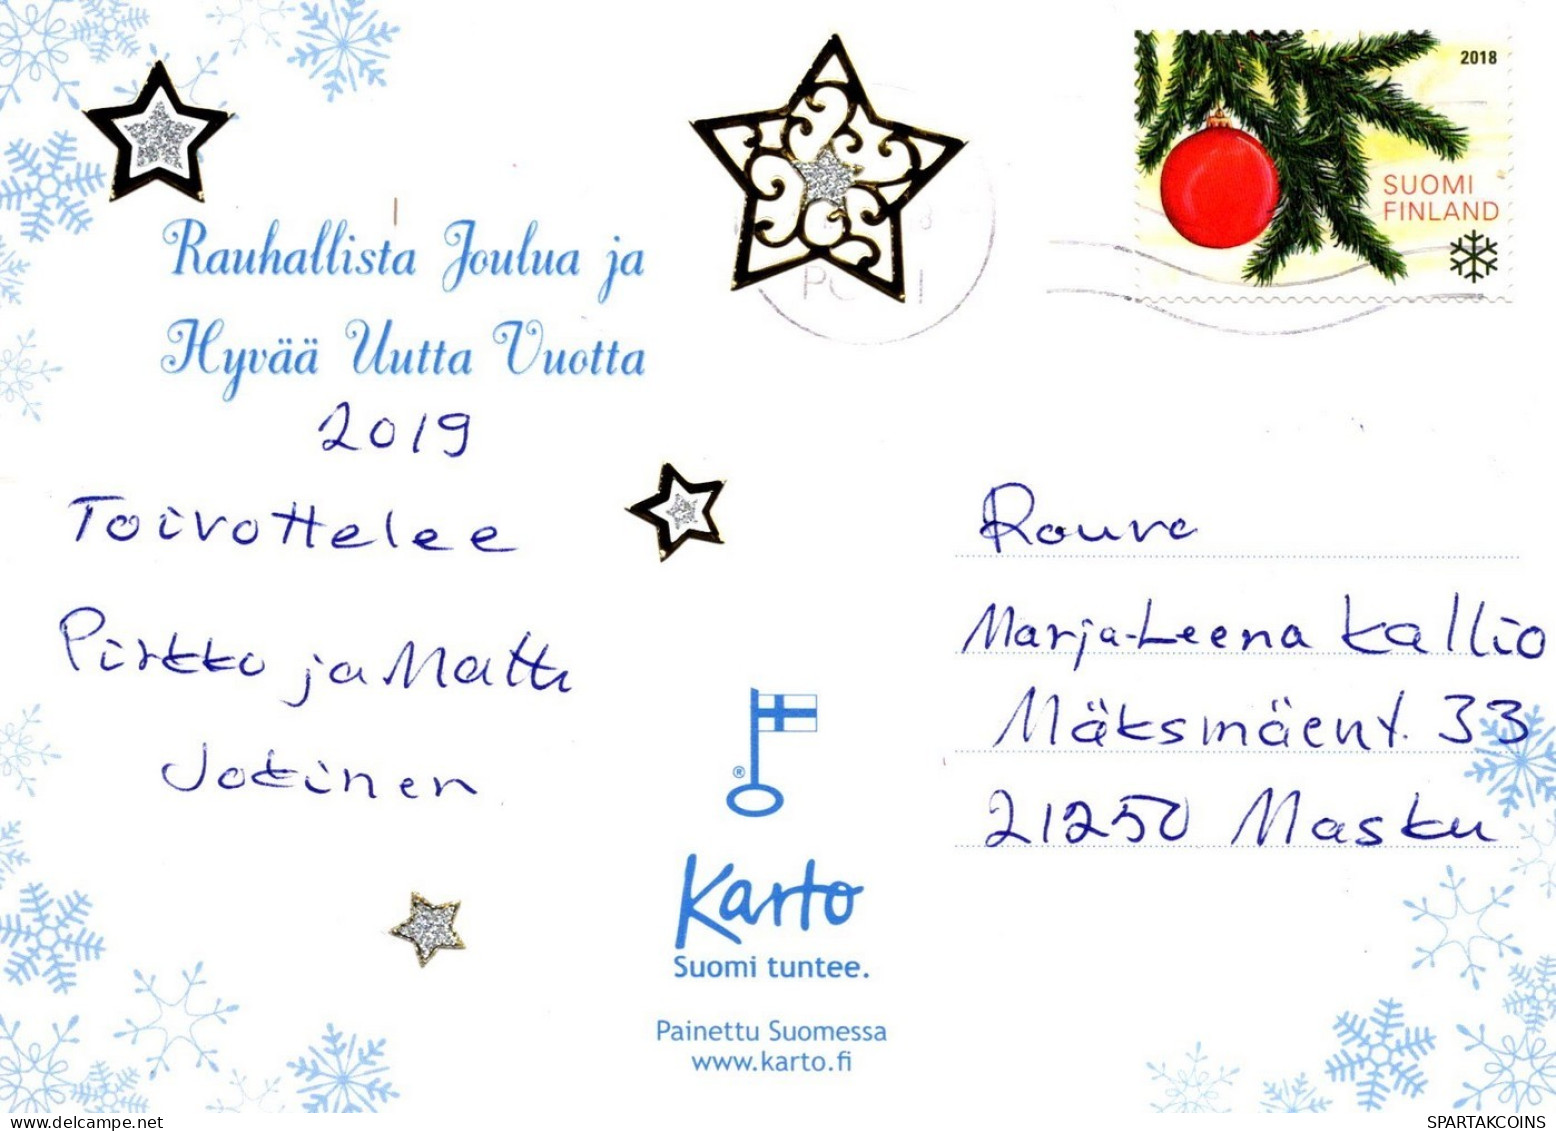 ANGELO Buon Anno Natale Vintage Cartolina CPSM #PAH188.IT - Engelen